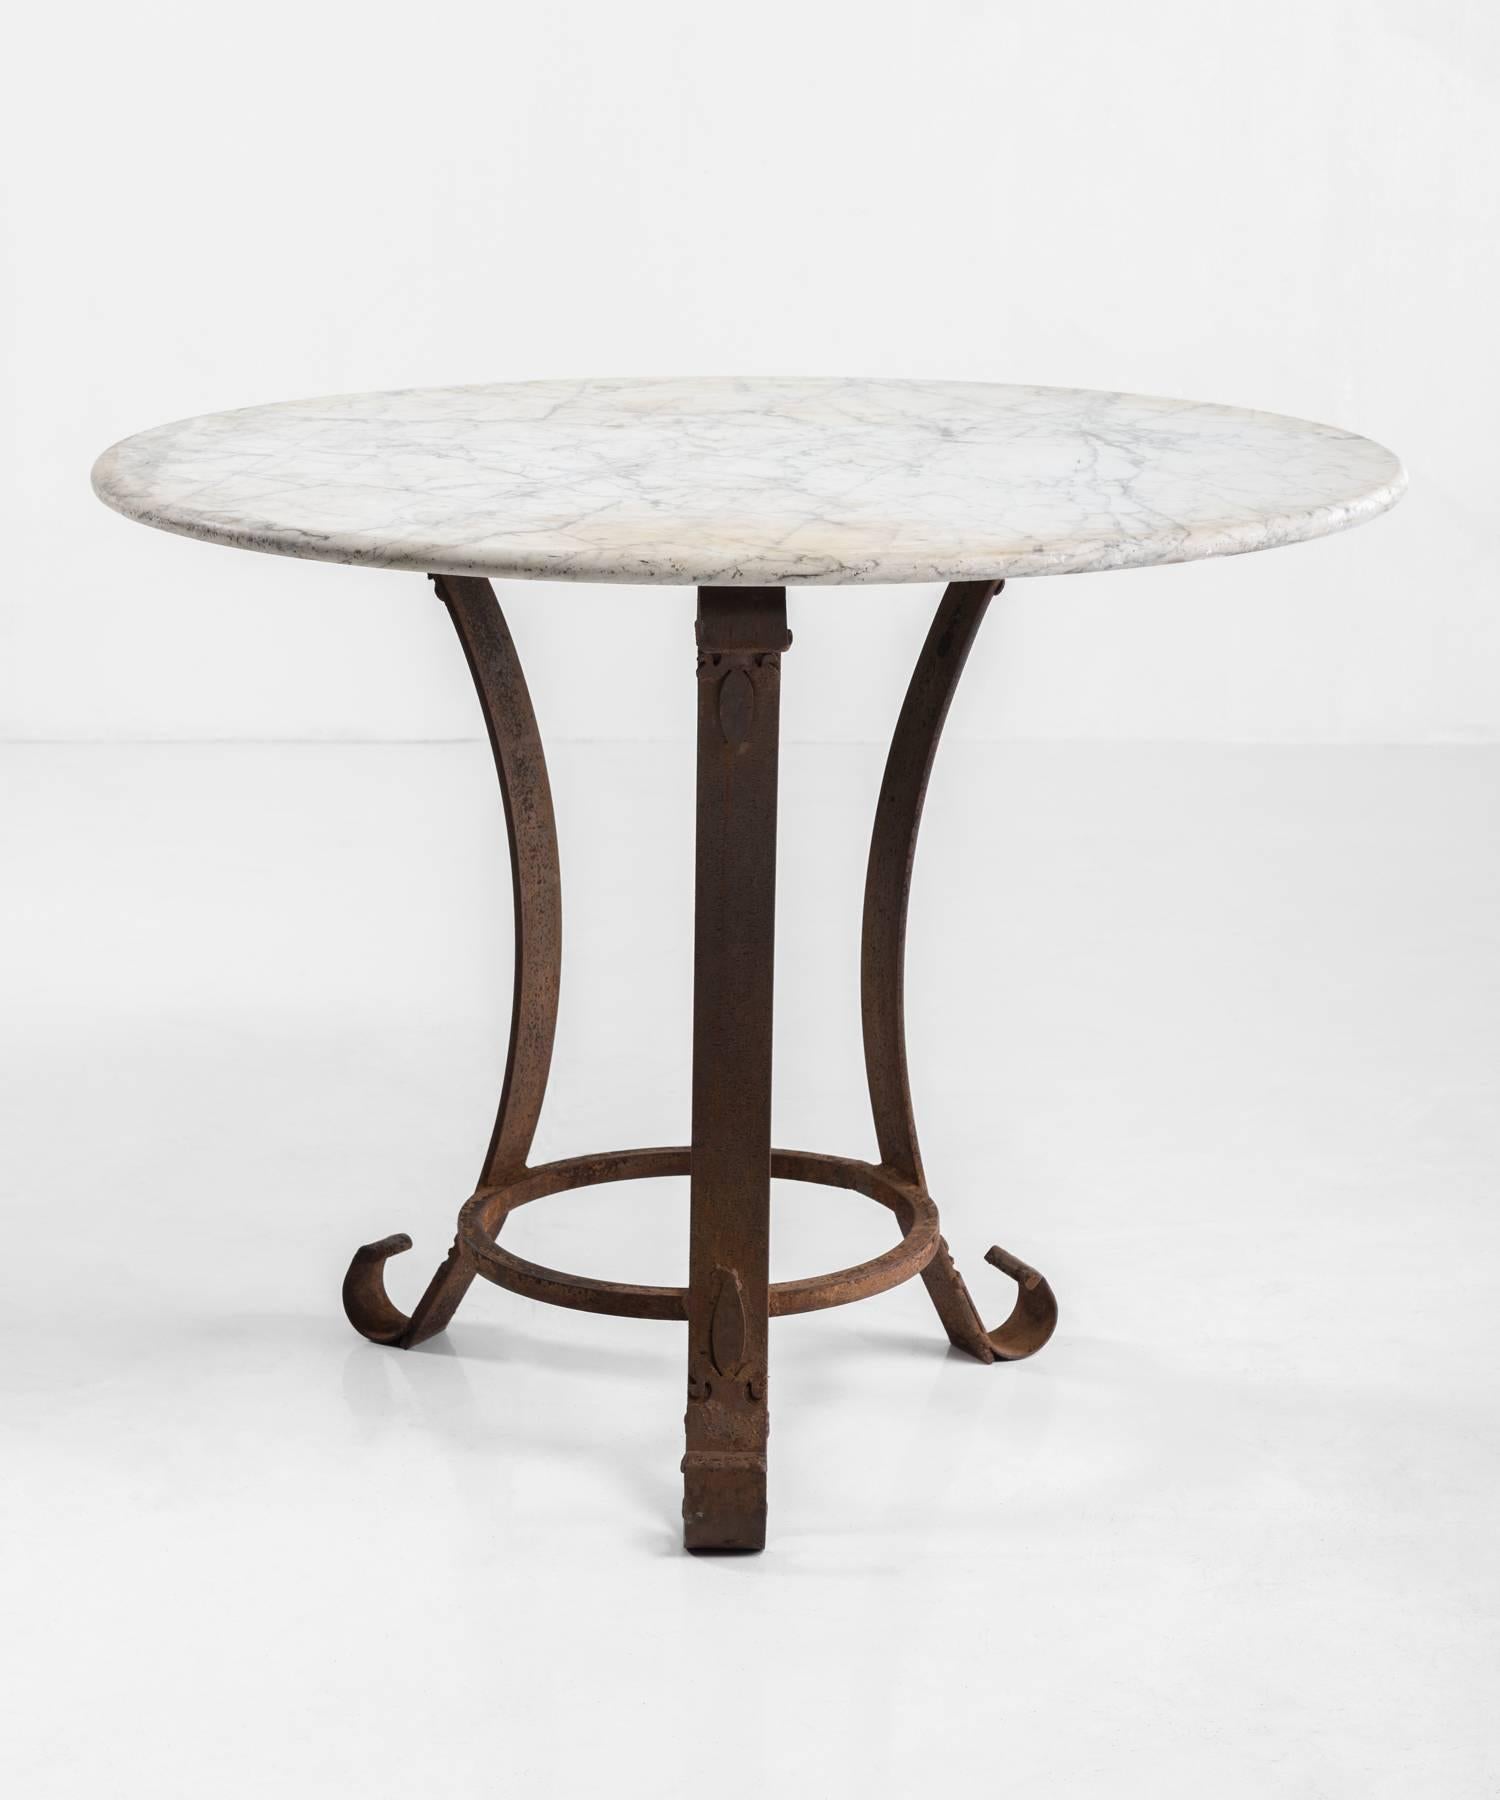 Iron and Marble Centre Table, circa 1890

Circular Carrara marble top on patinated iron base.